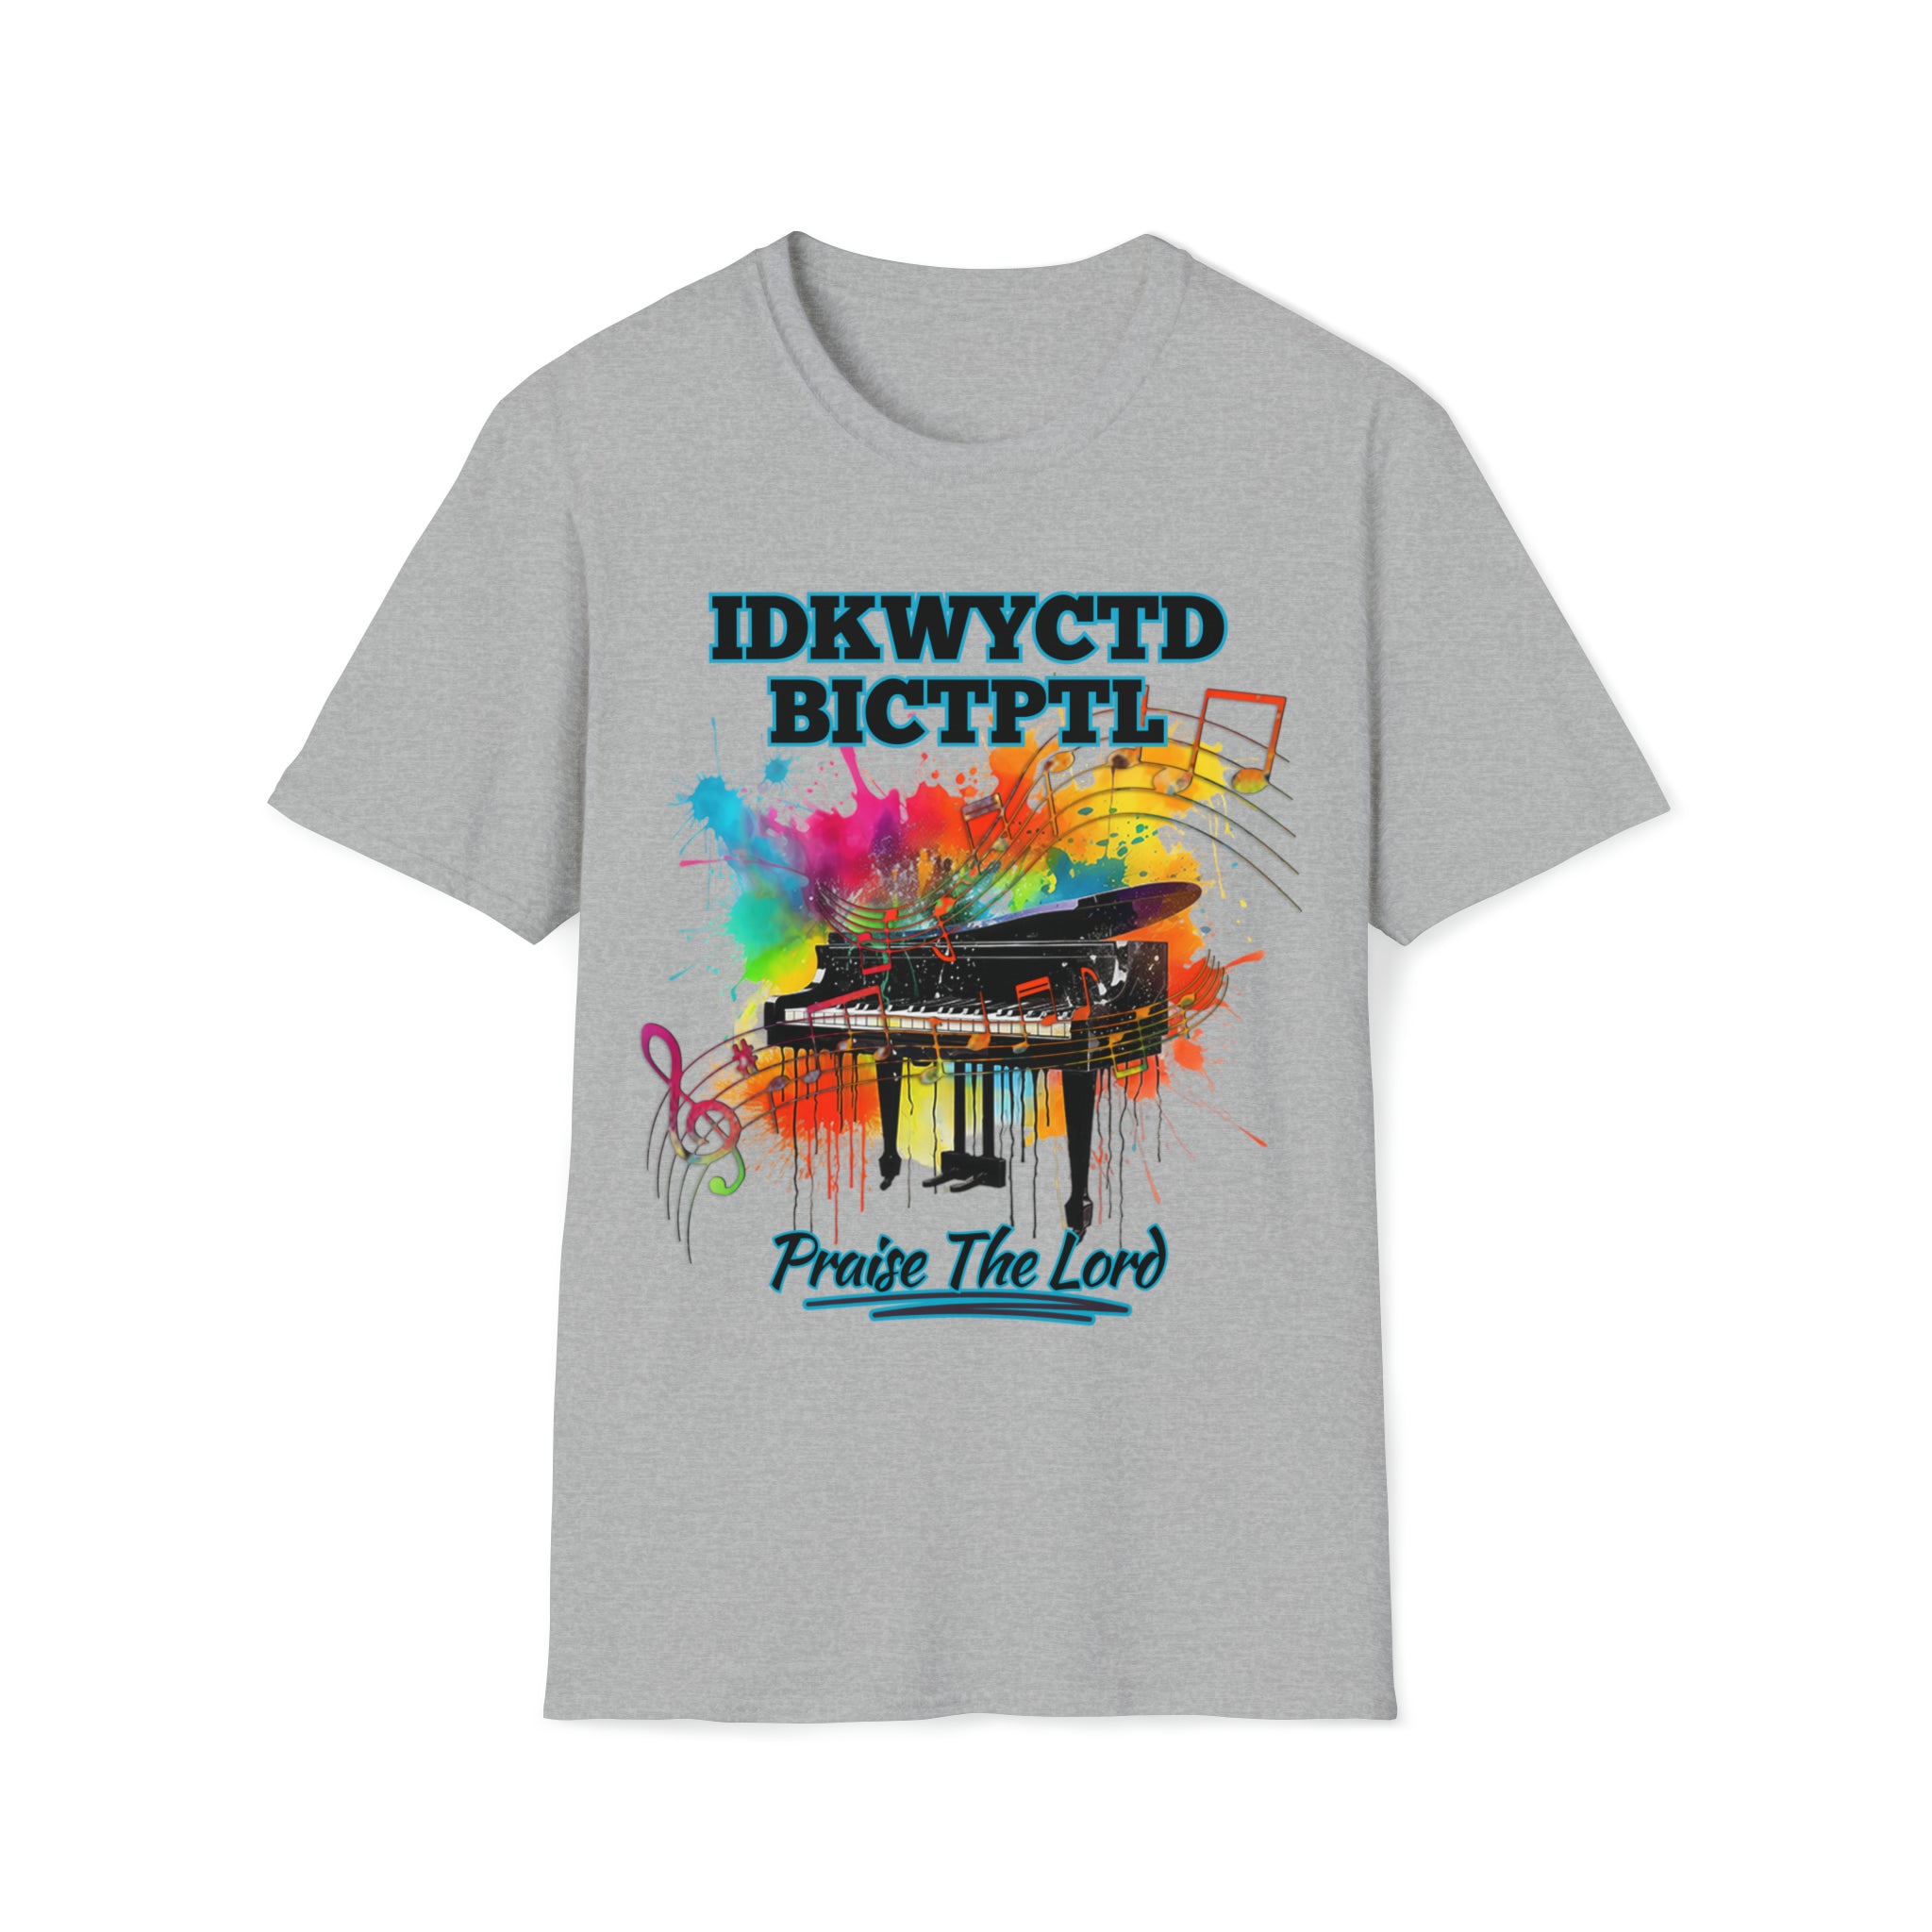 IDKWYCTDBICTPTL T-Shirt, Praise The Lord Shirt